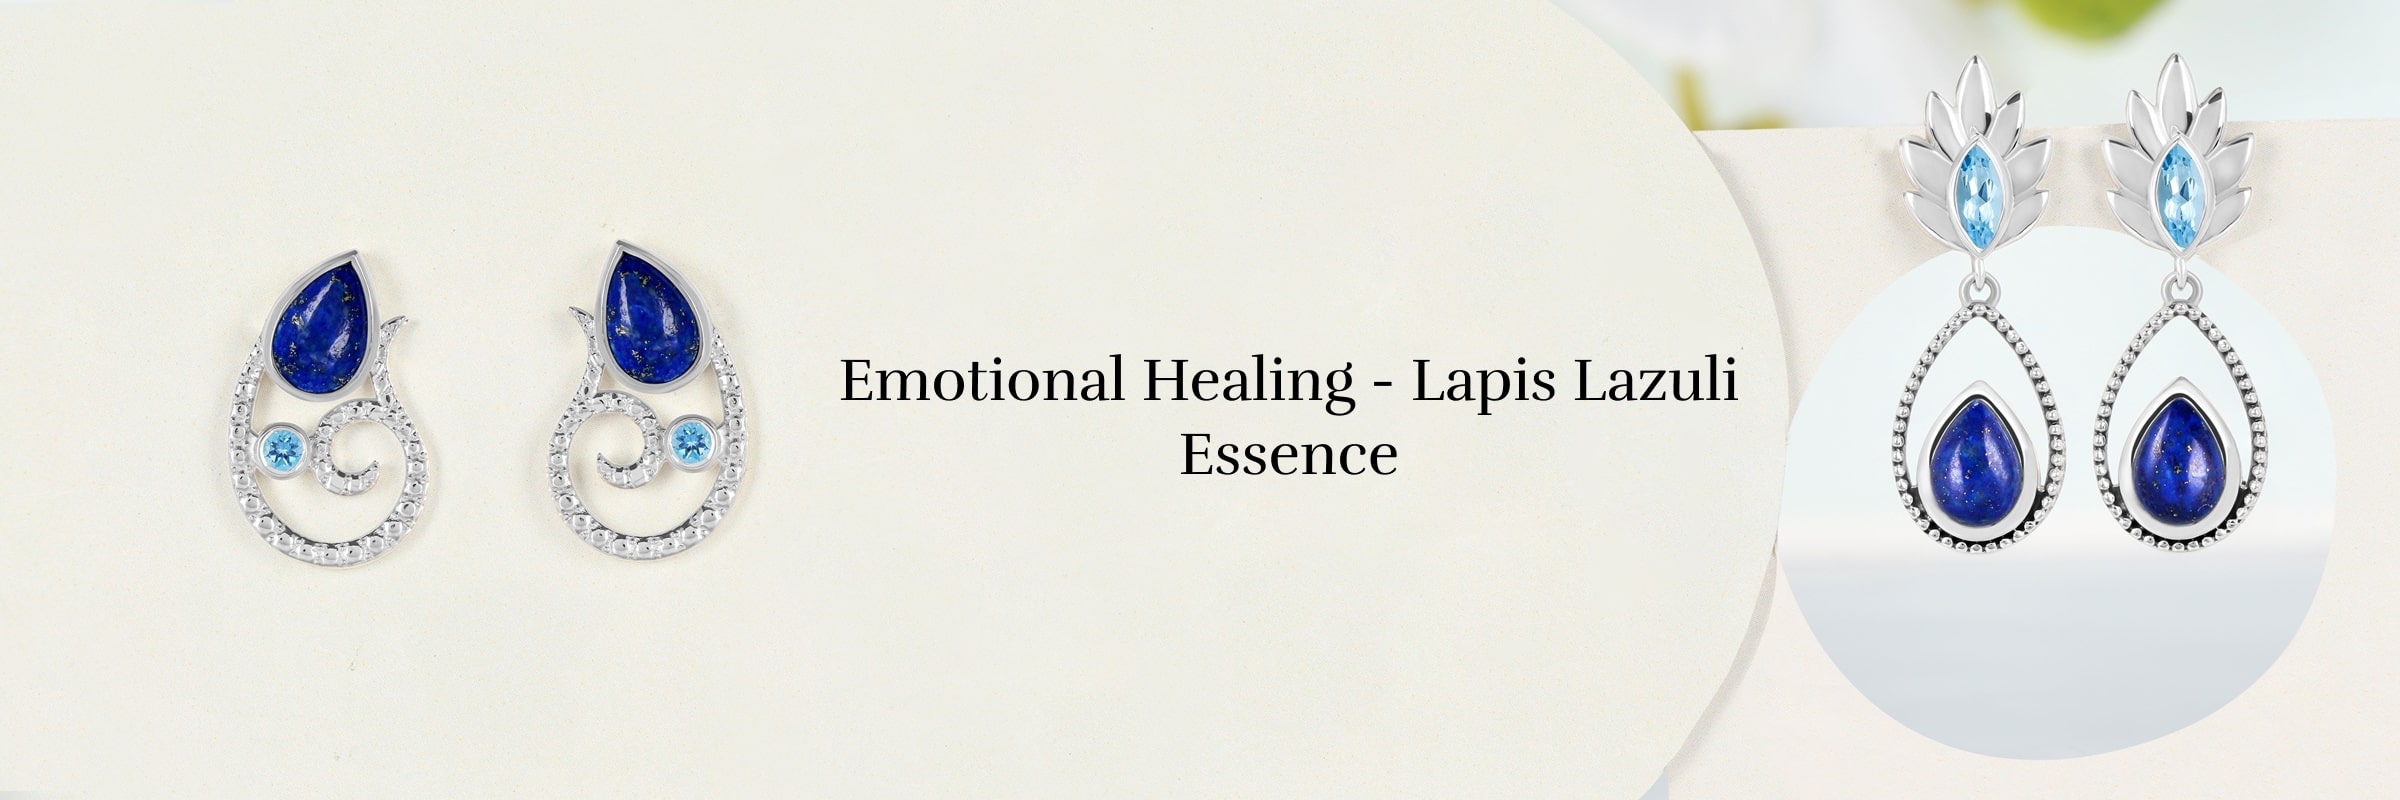 Emotional Healing Properties